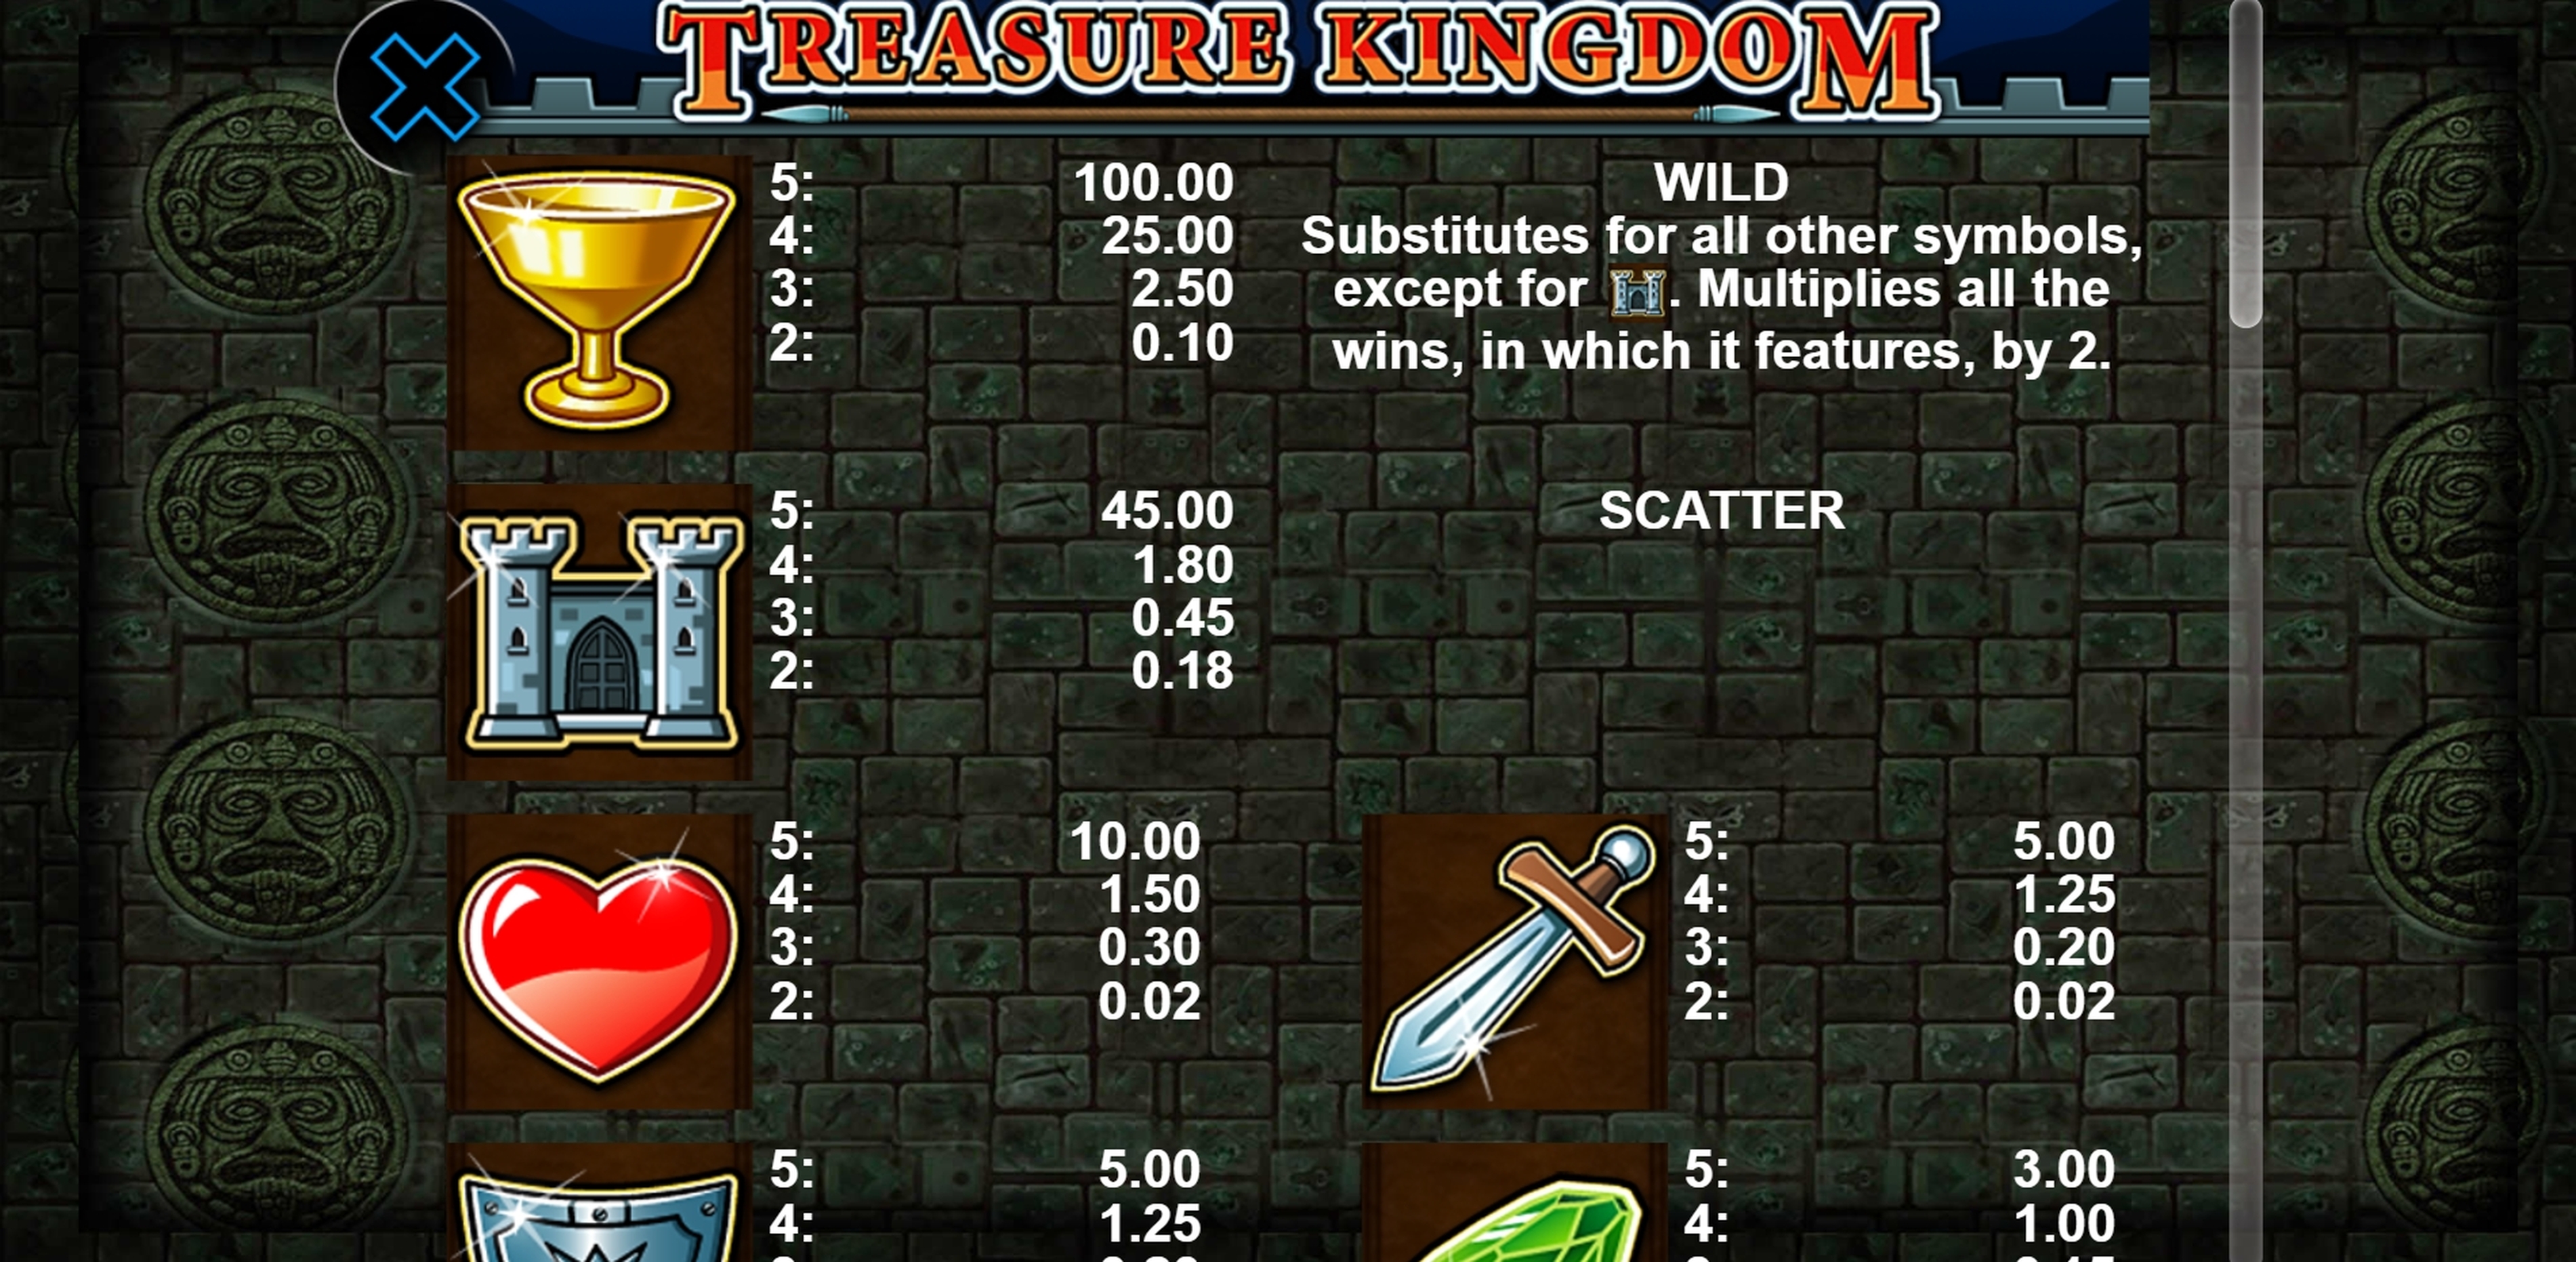 Info of Treasure Kingdom Slot Game by casino technology